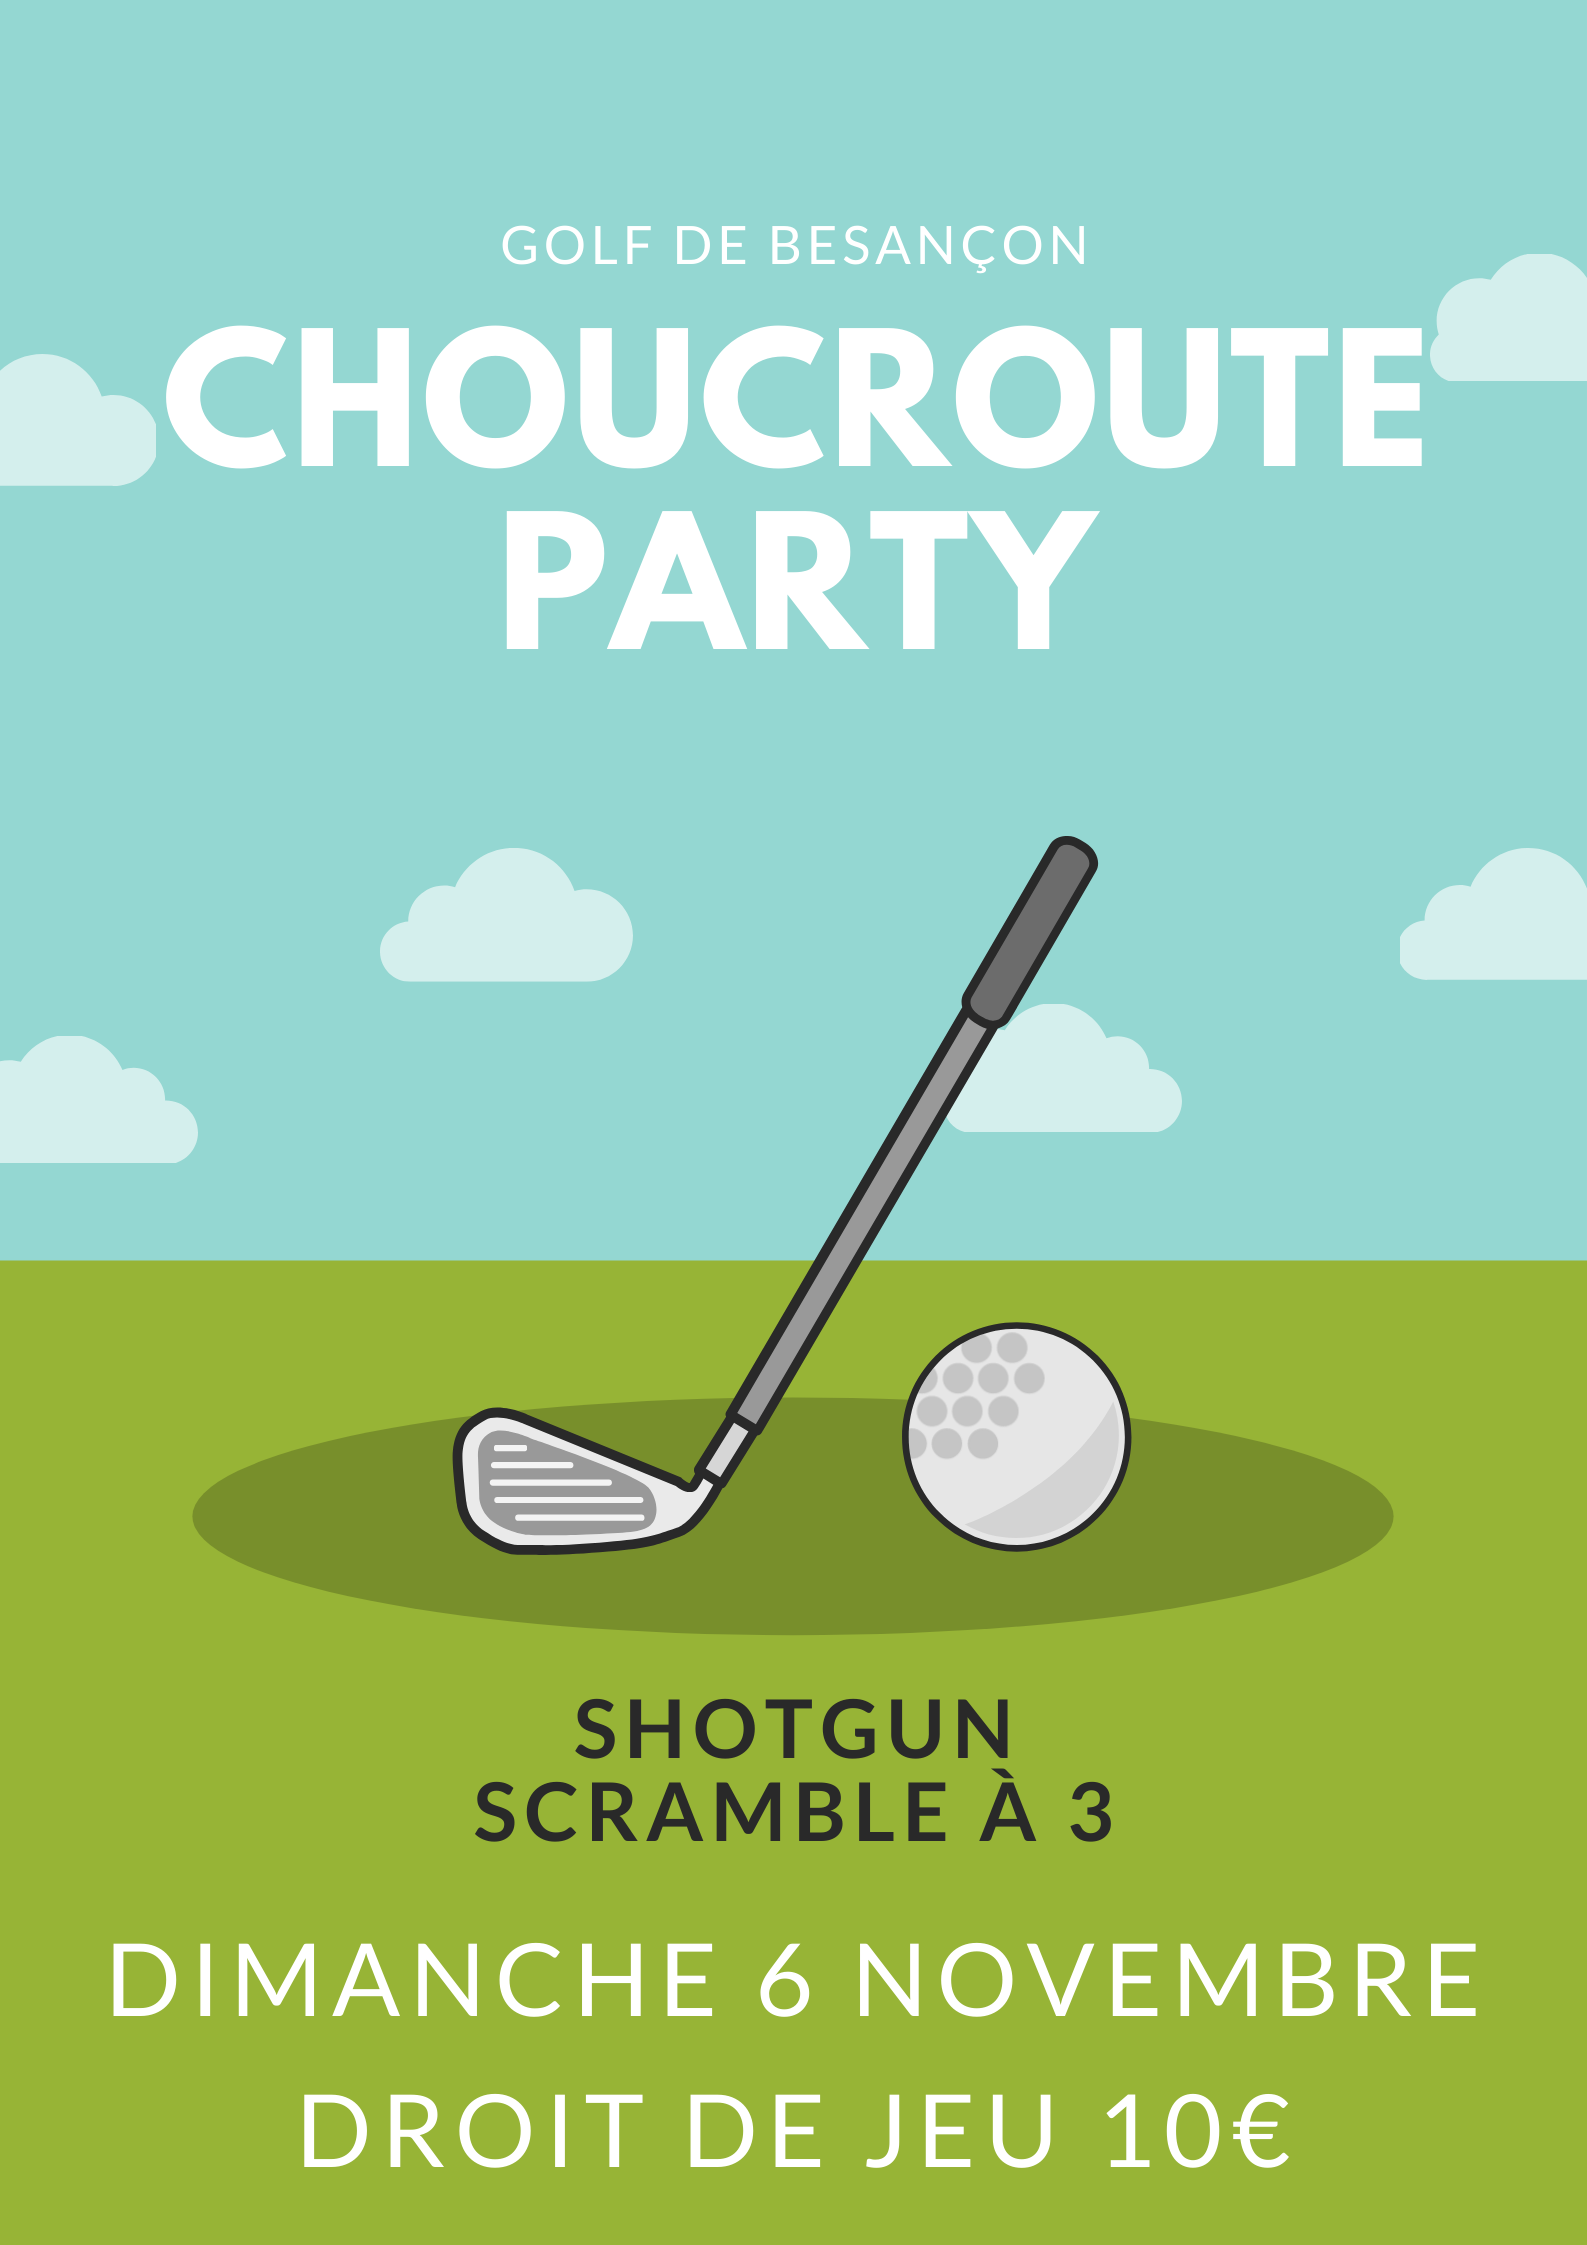 Choucroute Party